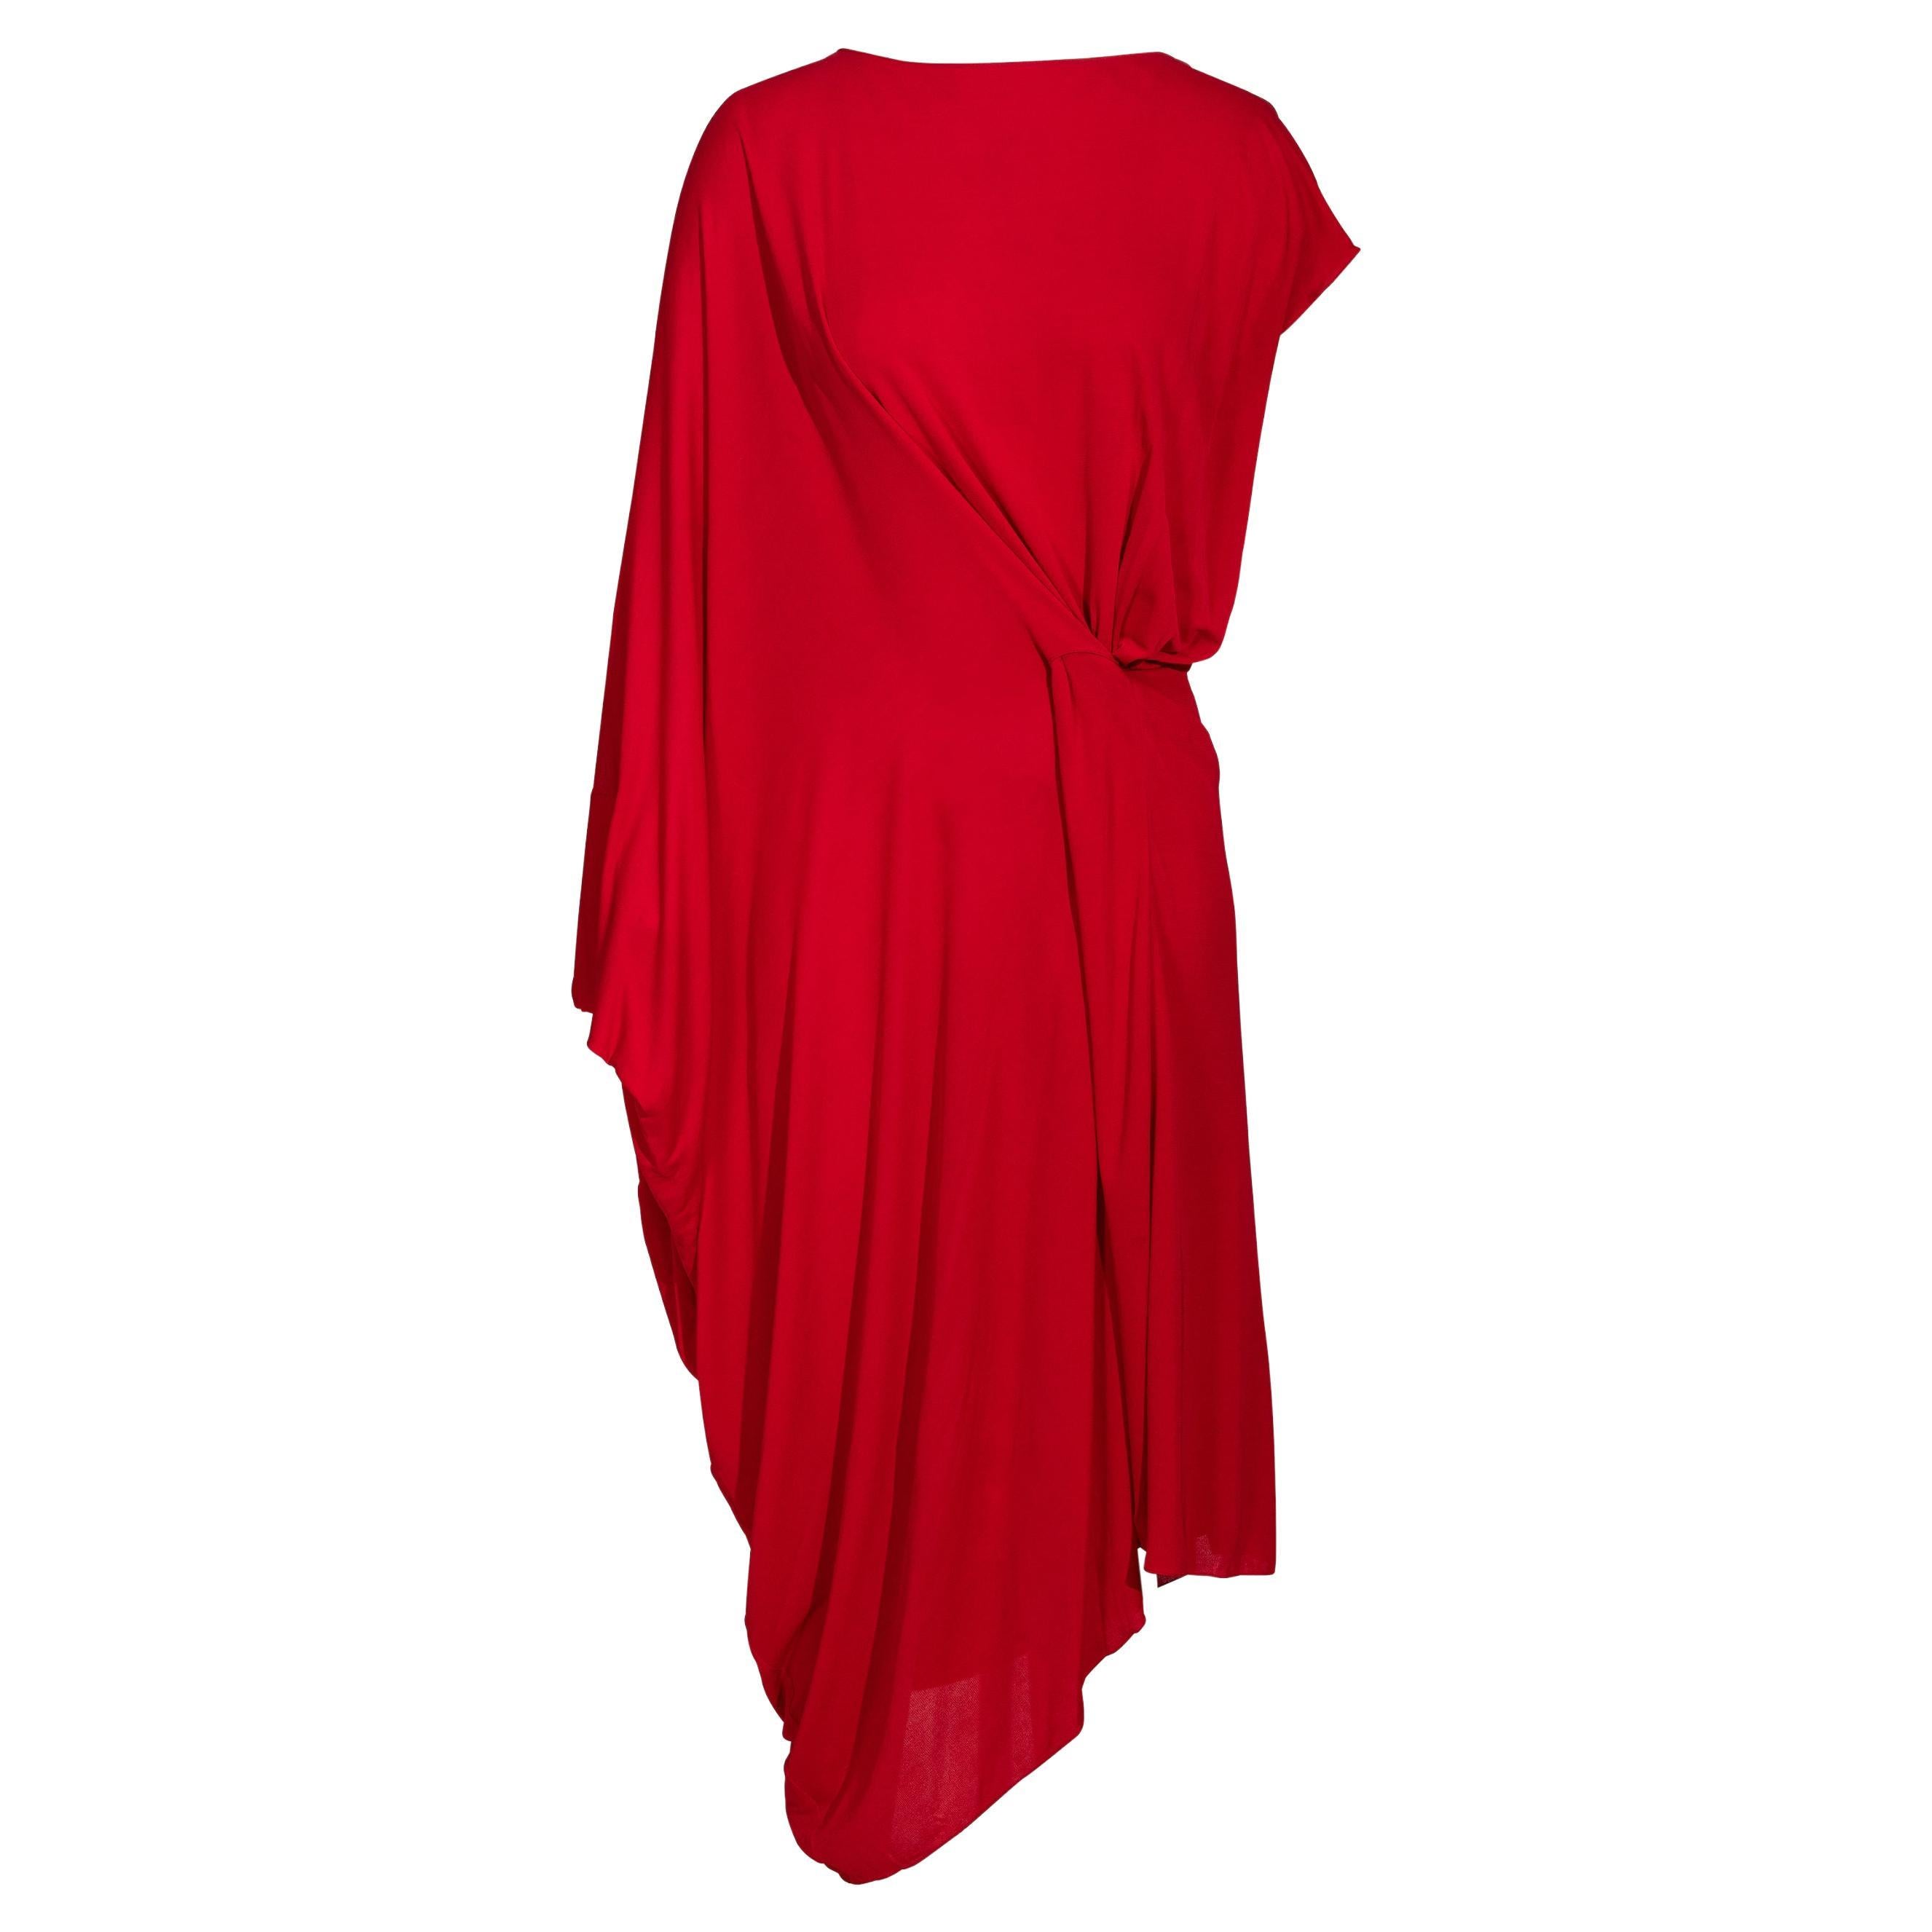 S/S 2009 Maison Martin Margiela Red Jersey Asymmetrical Drape Dress For Sale